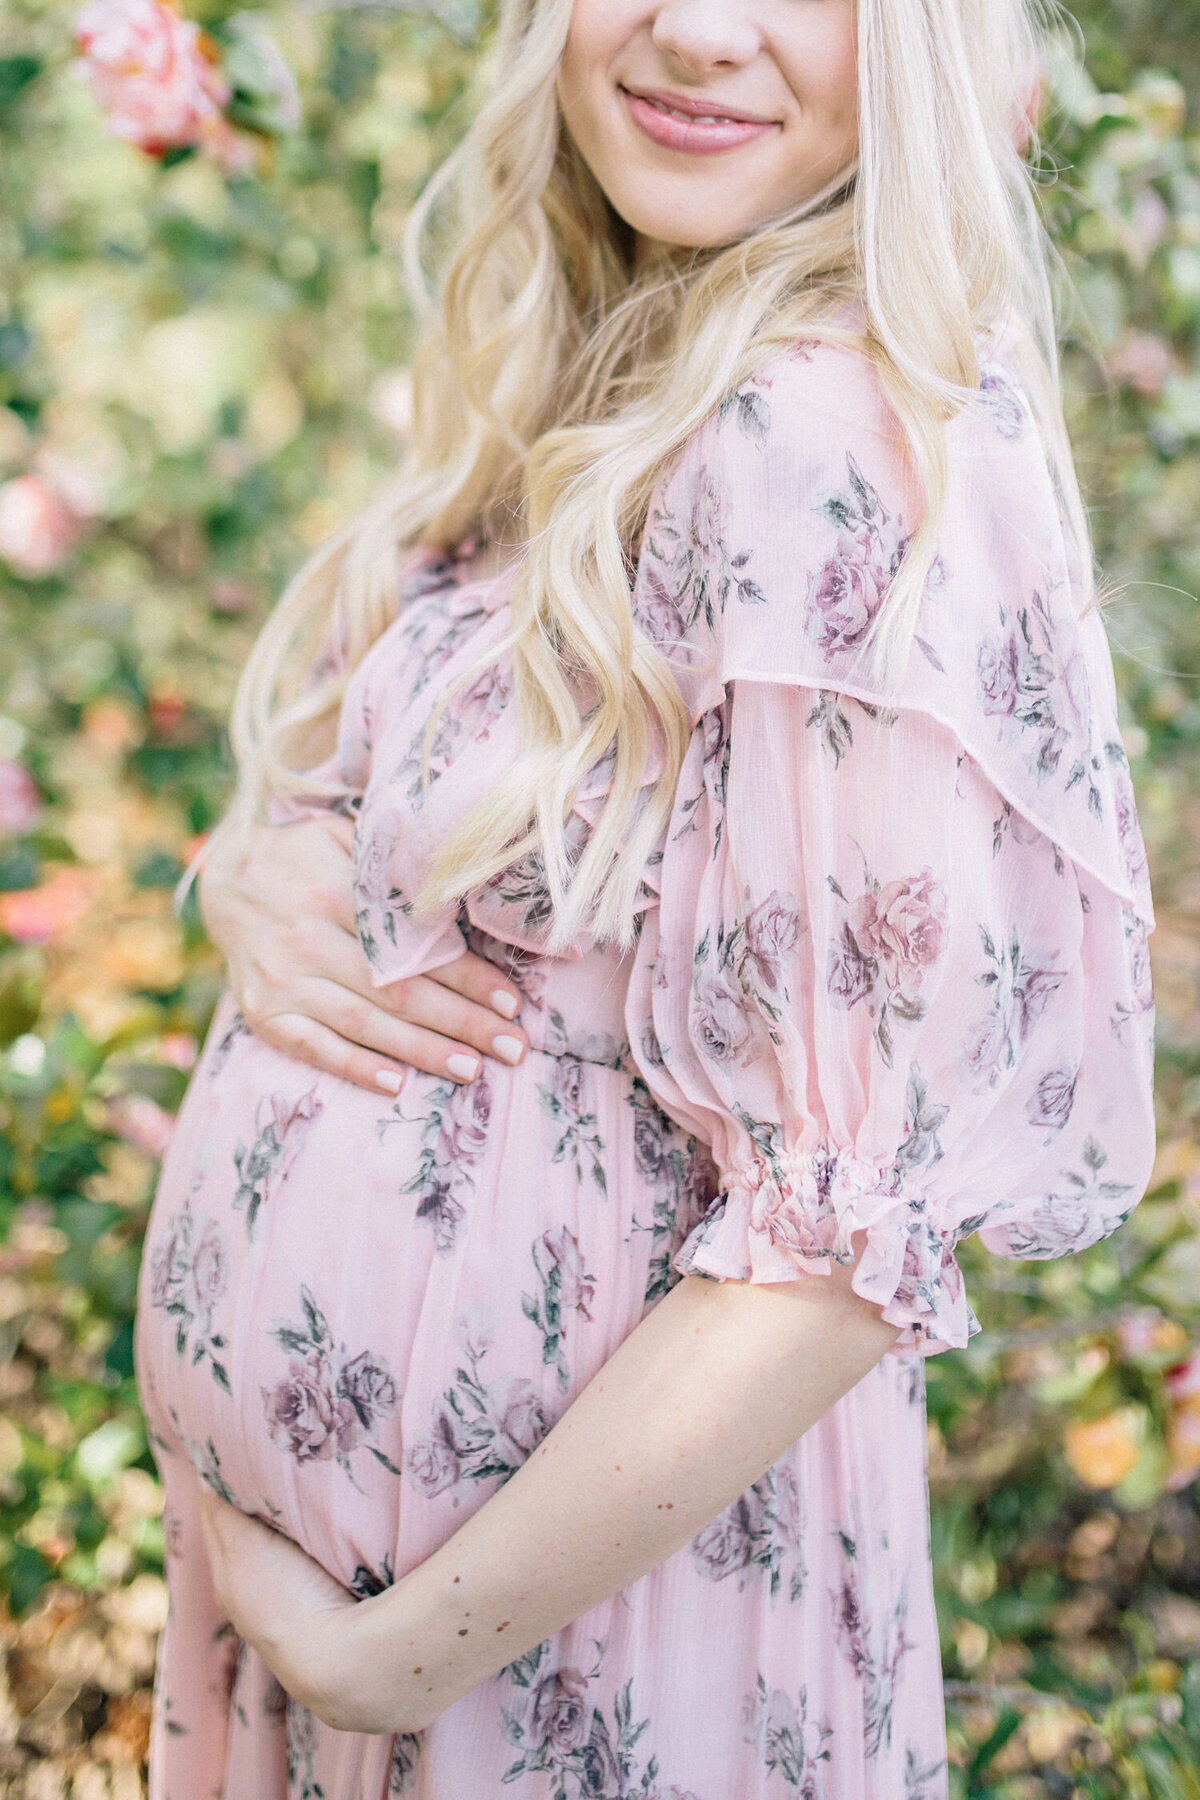 Chattanooga-maternity-photographer27